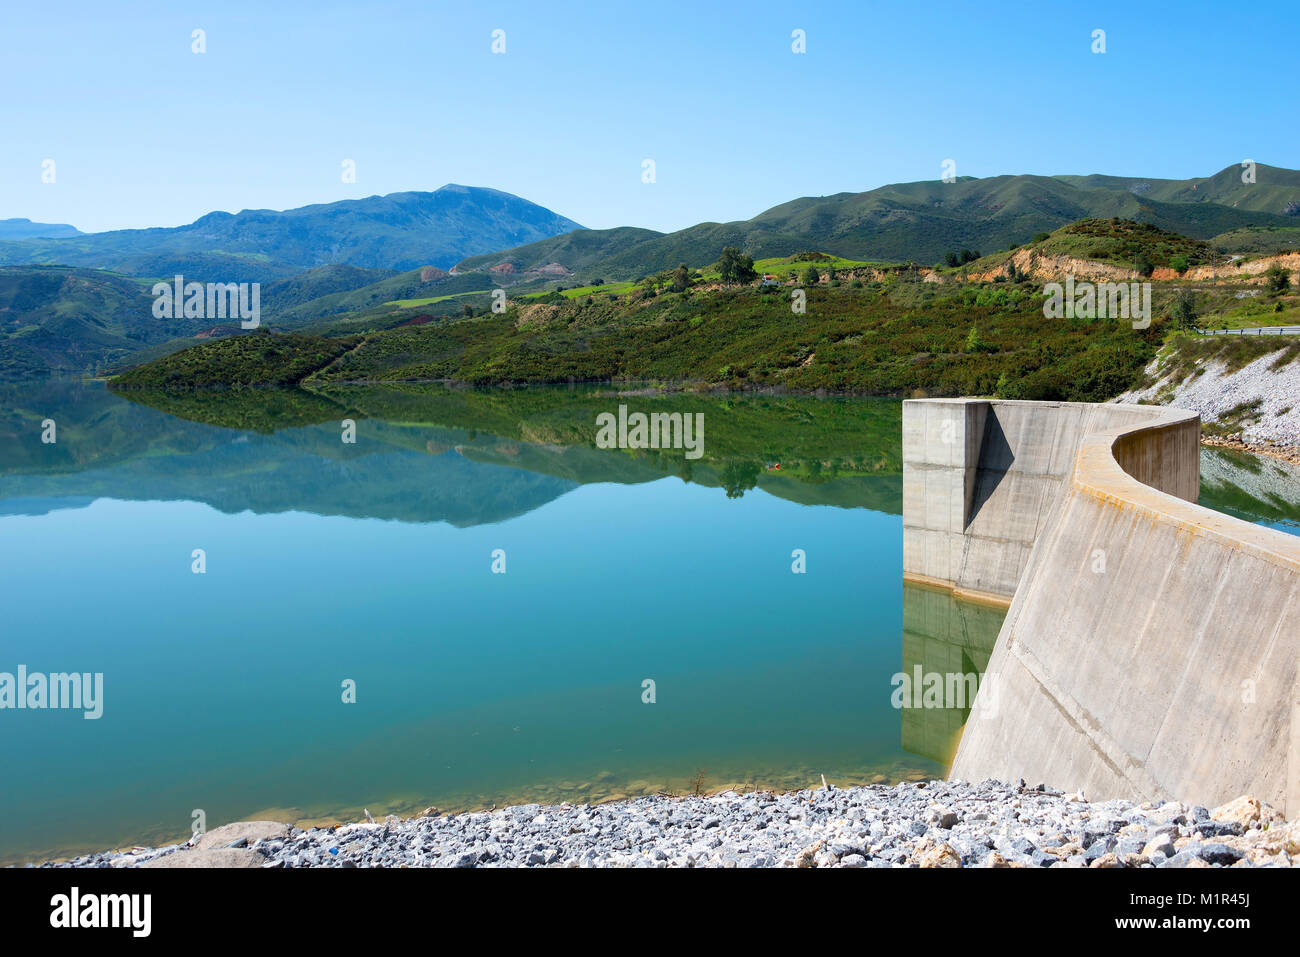 Potamon dam and reservoir, Crete, Greece Amari Dam, Potamon Damm ...